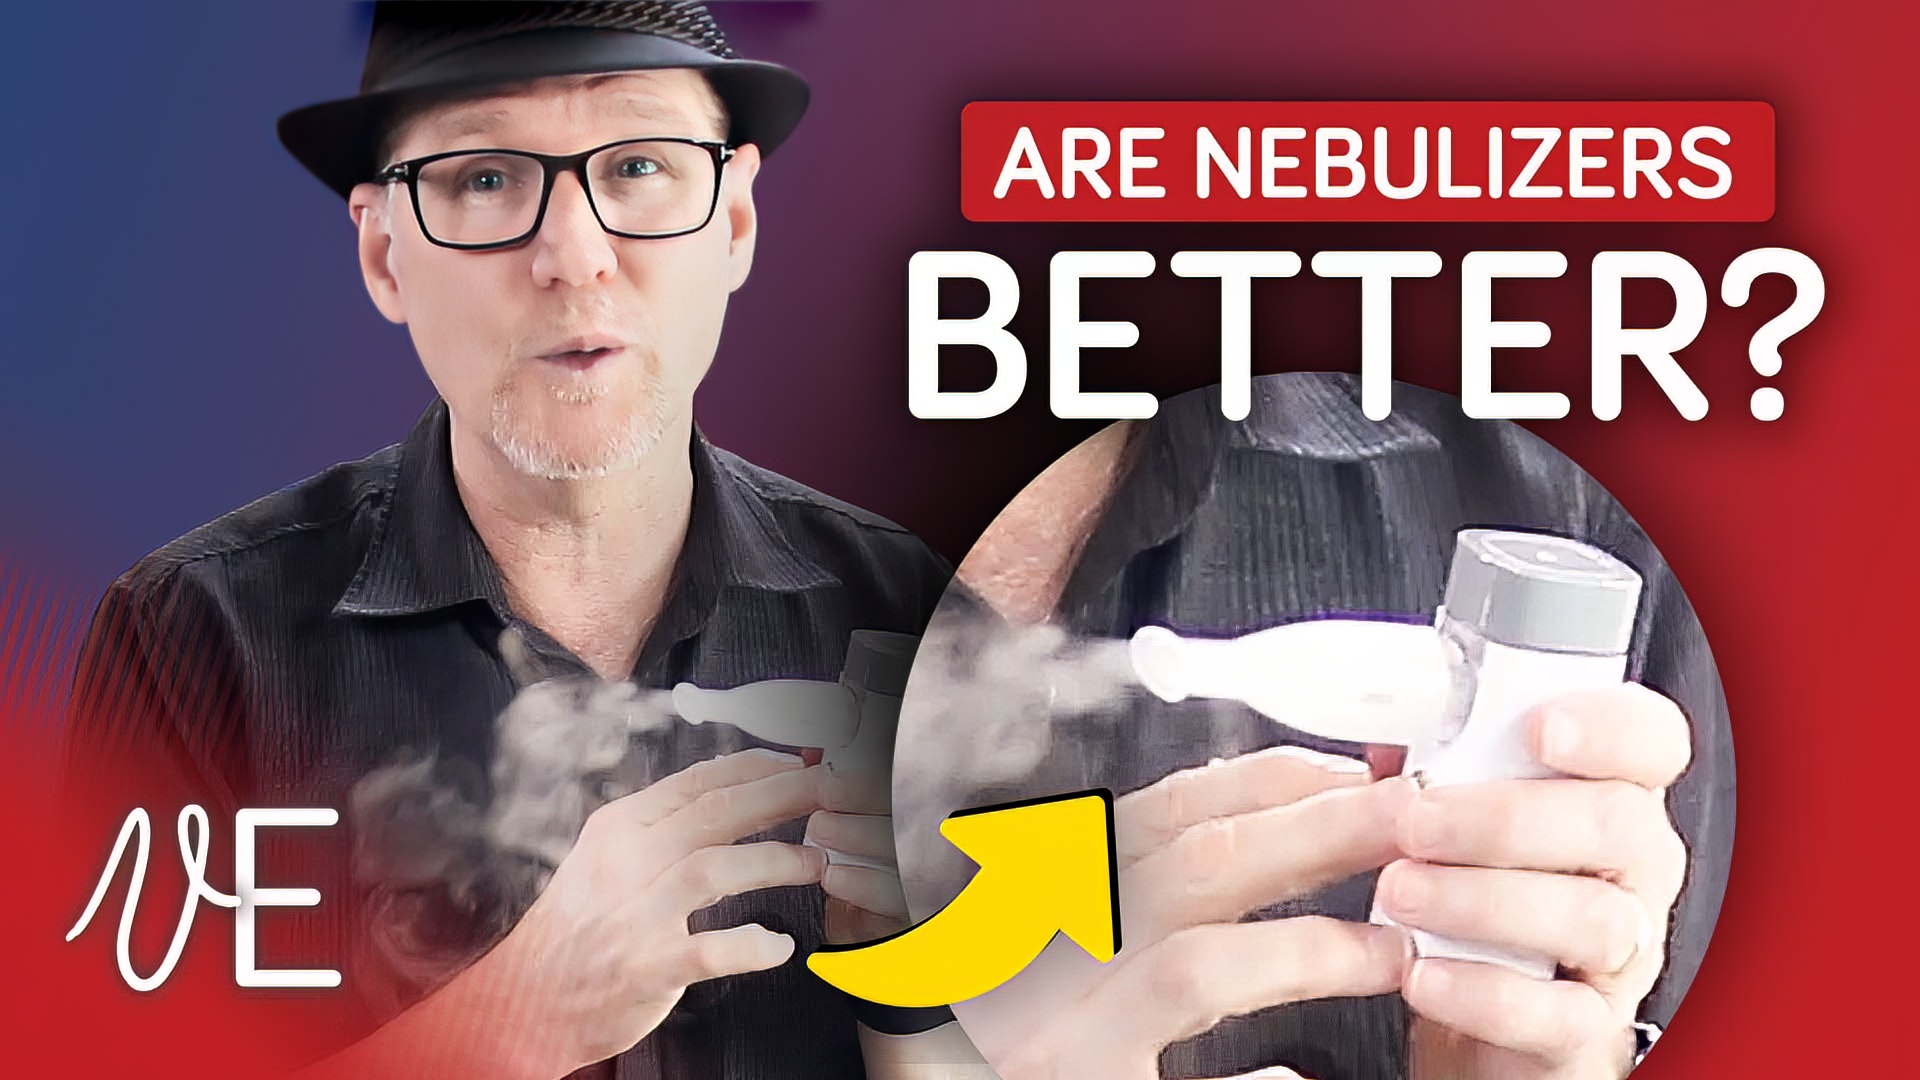 Steam Inhalers vs Portable Nebulizers